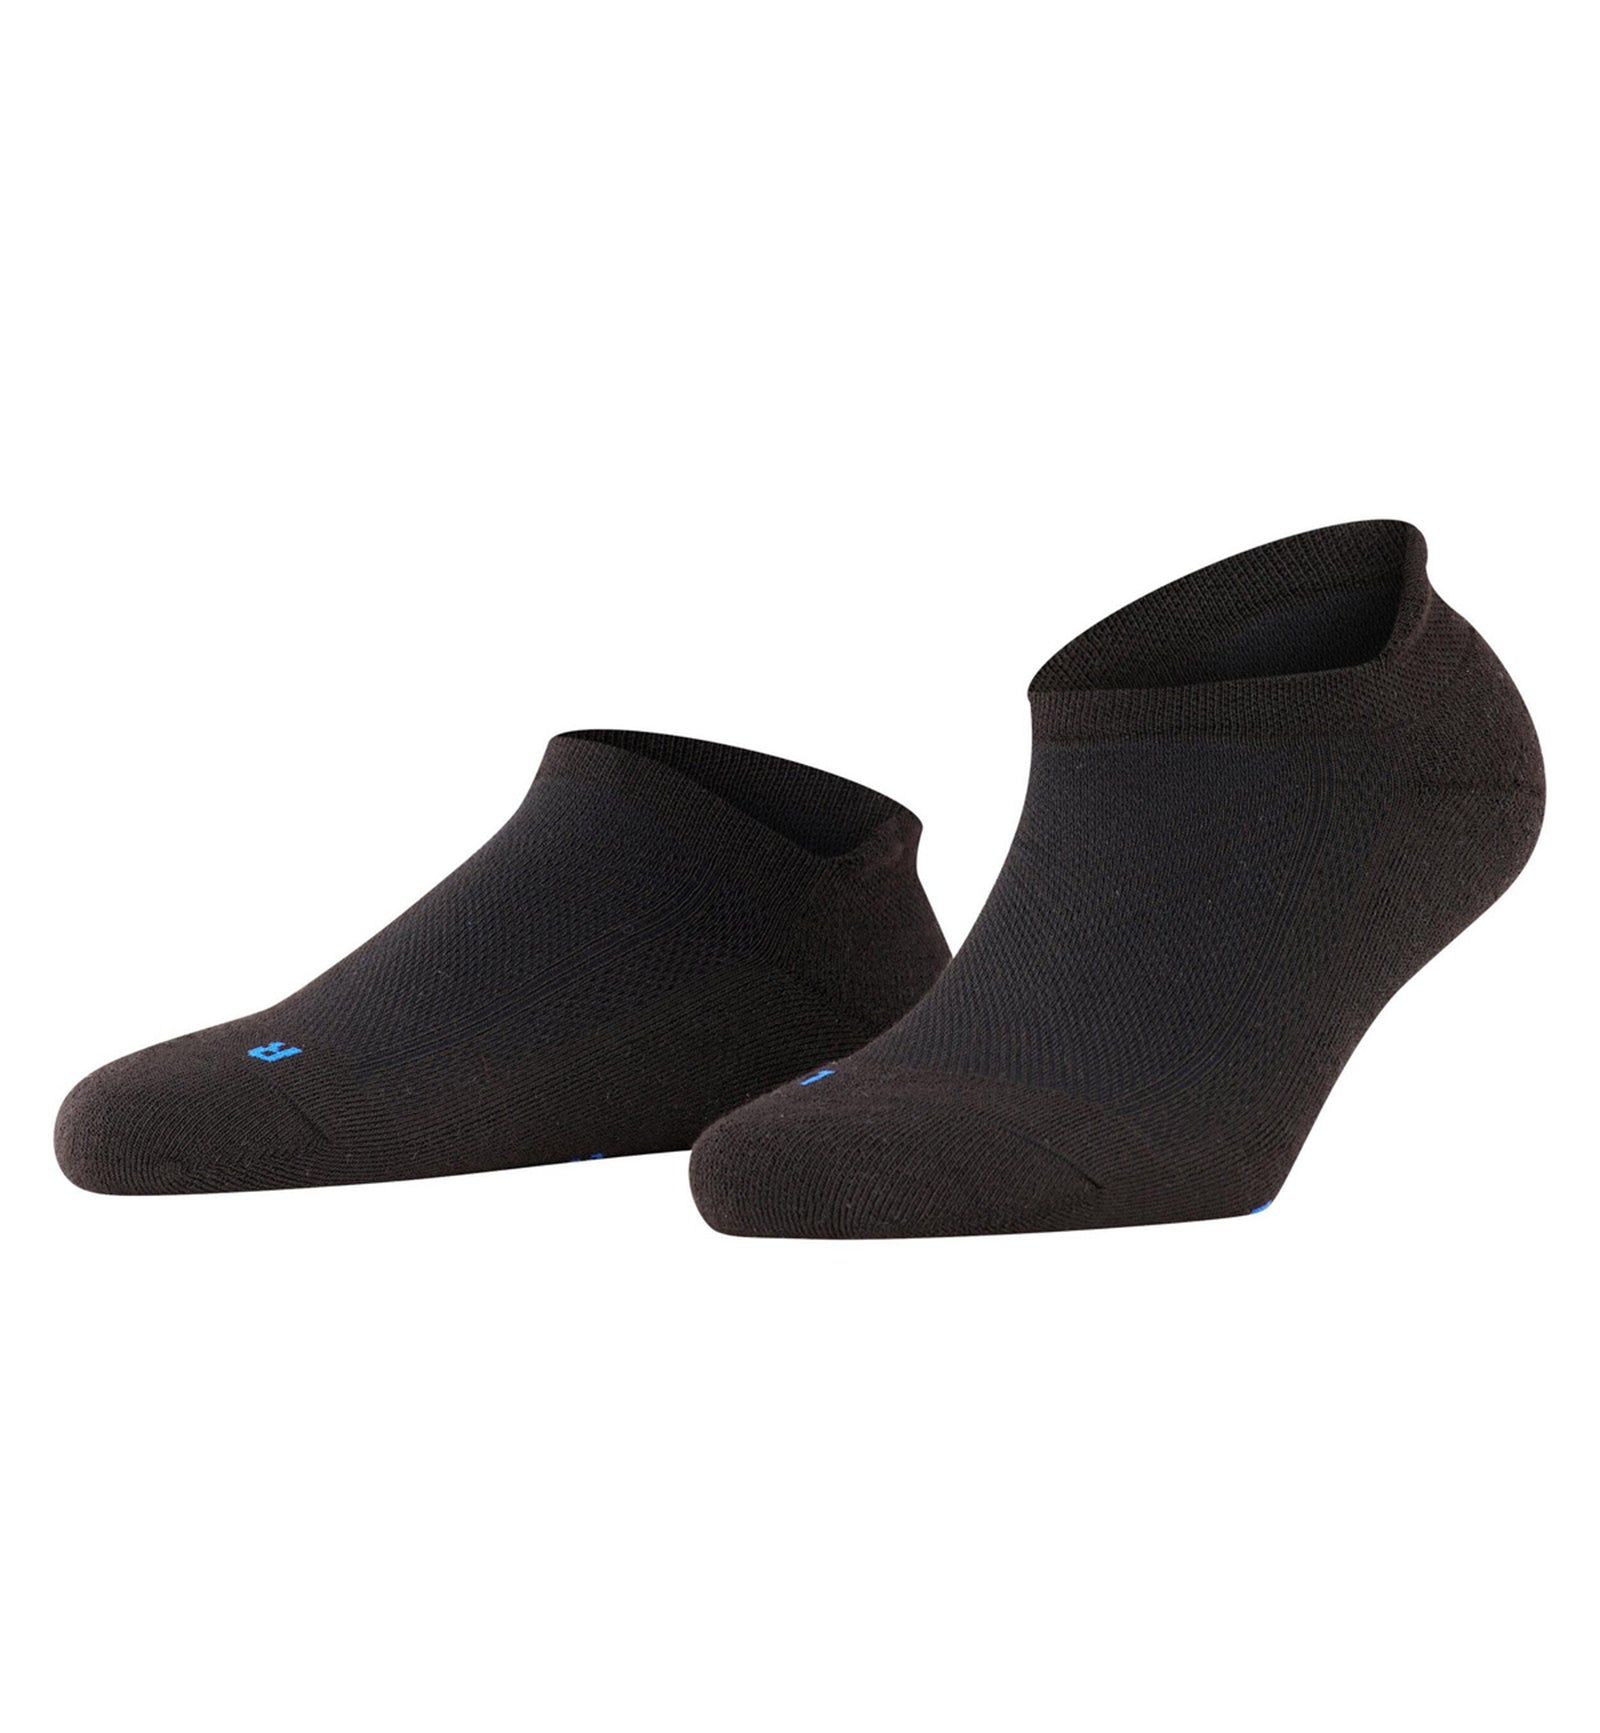 FALKE Cool Kick Sneaker Socks (46331),6.5/7.5,Black - Black,6.5/7.5